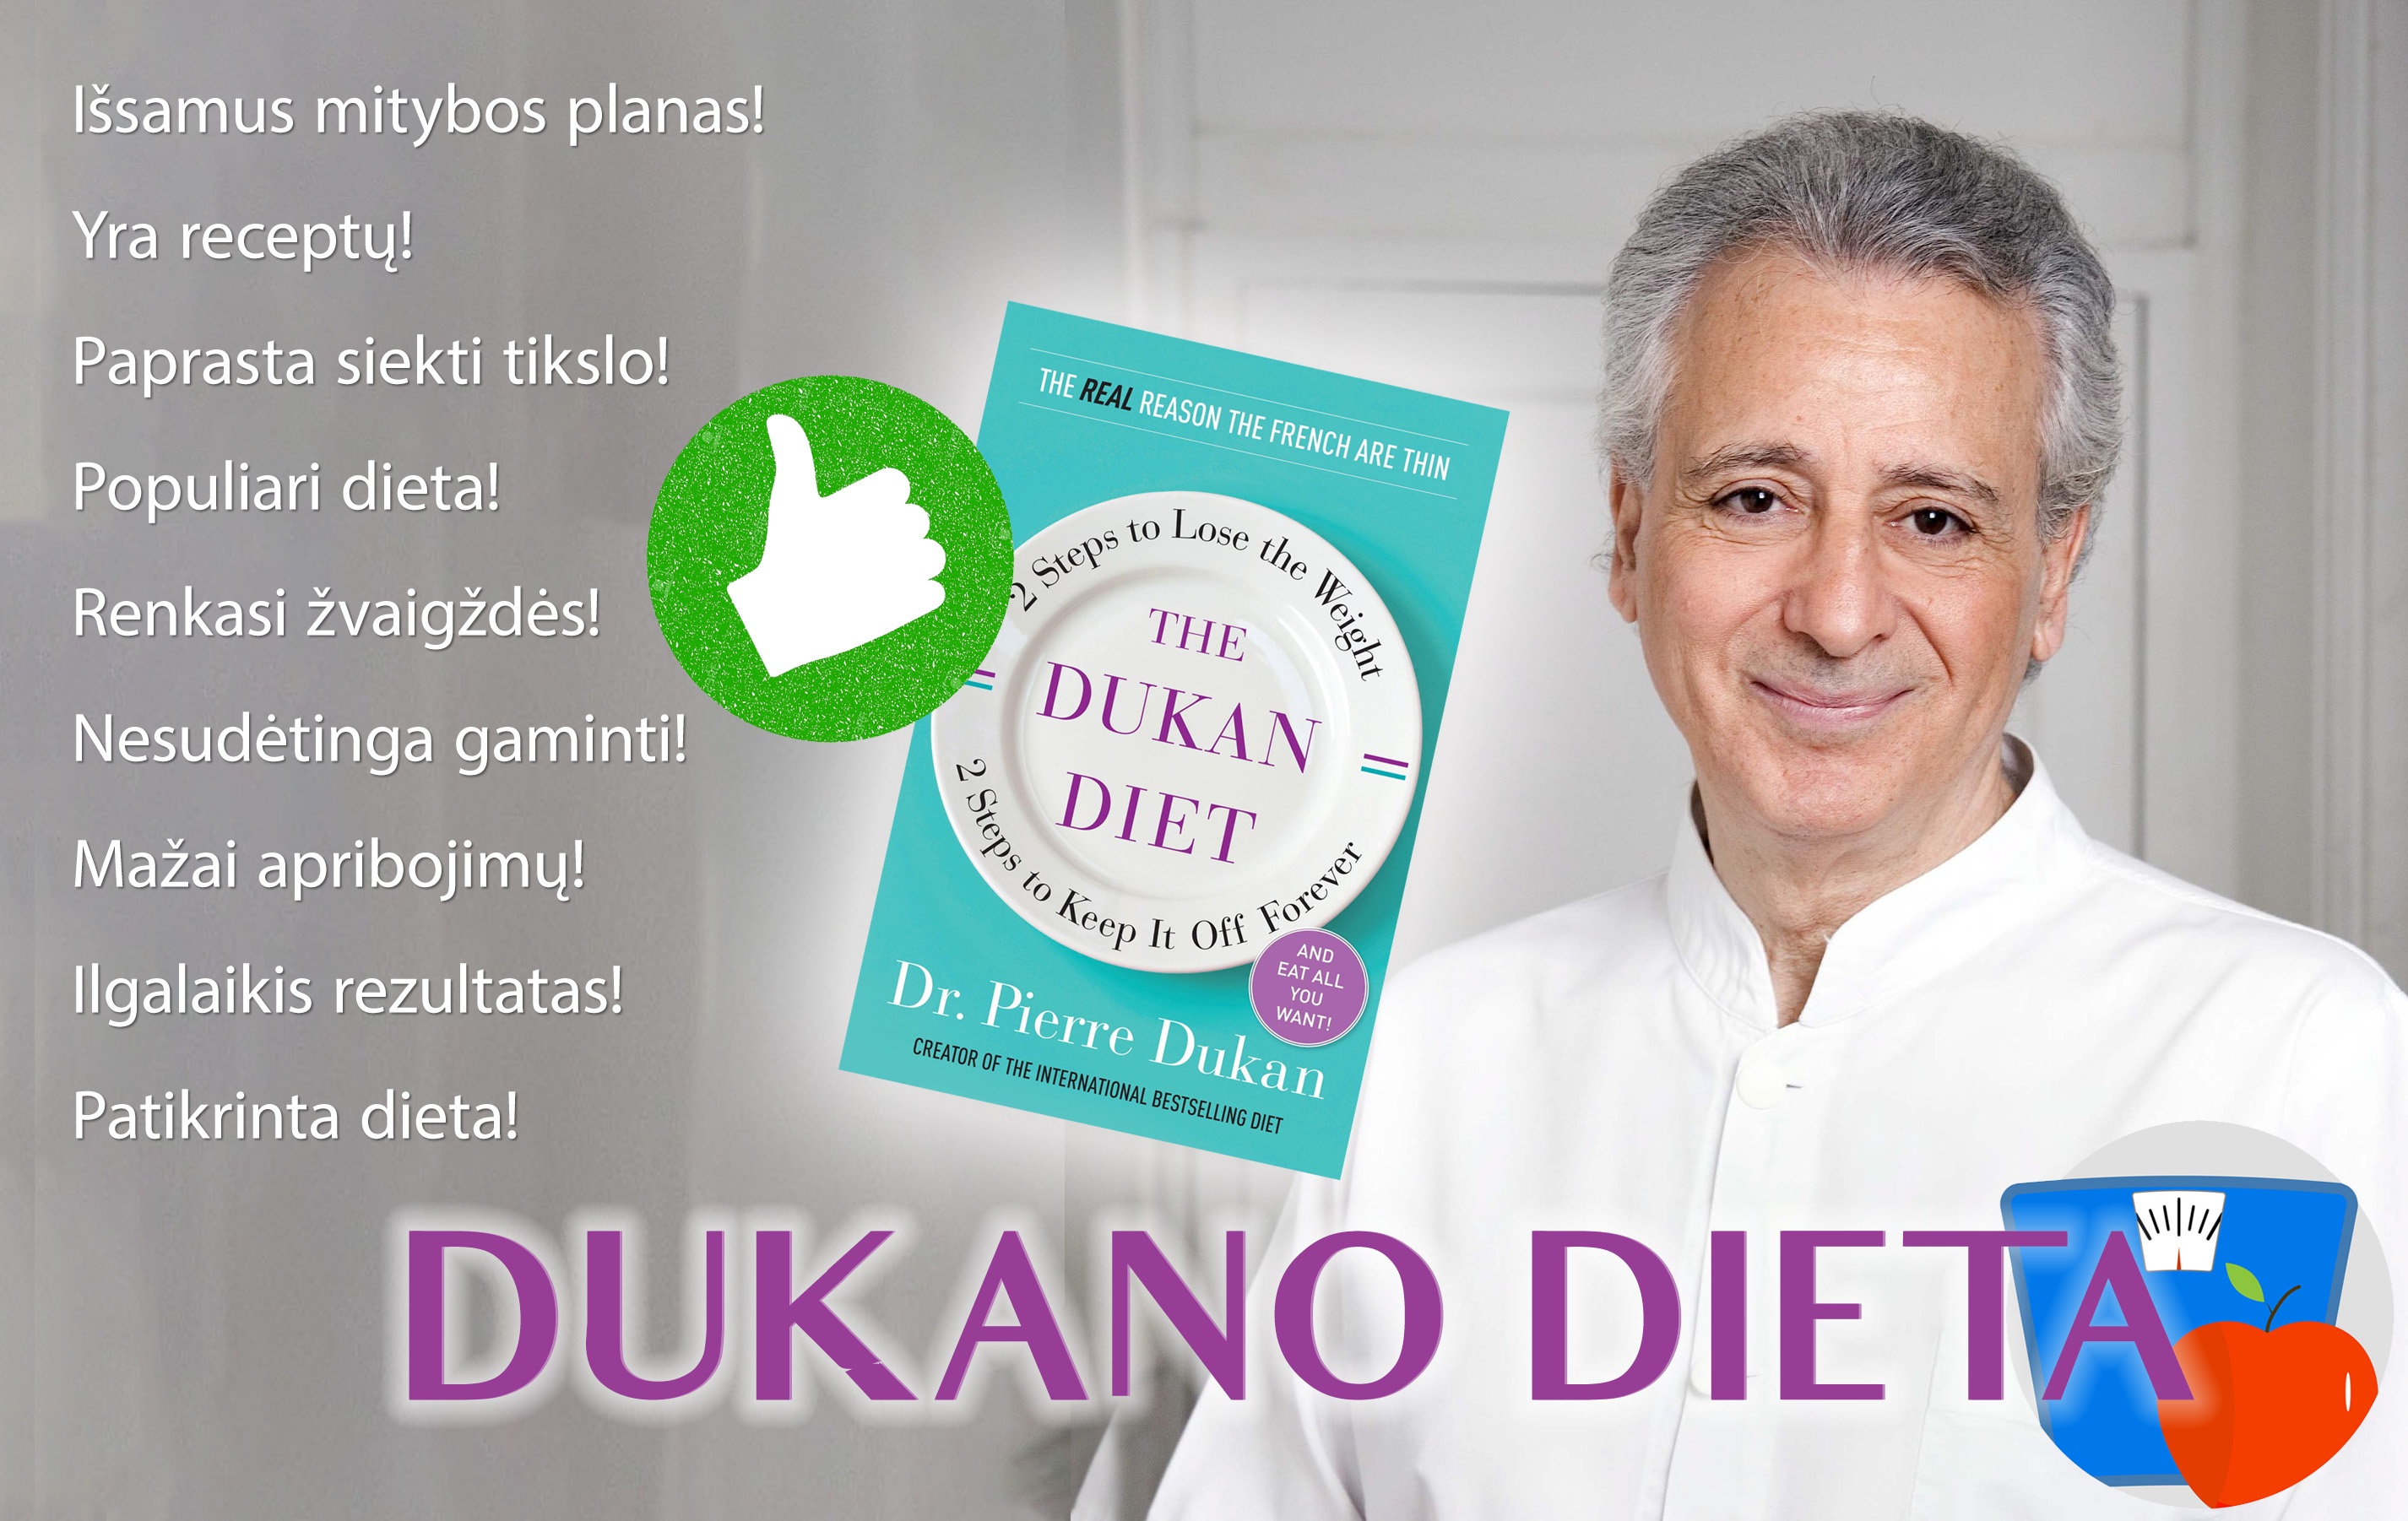 Dukano dieta